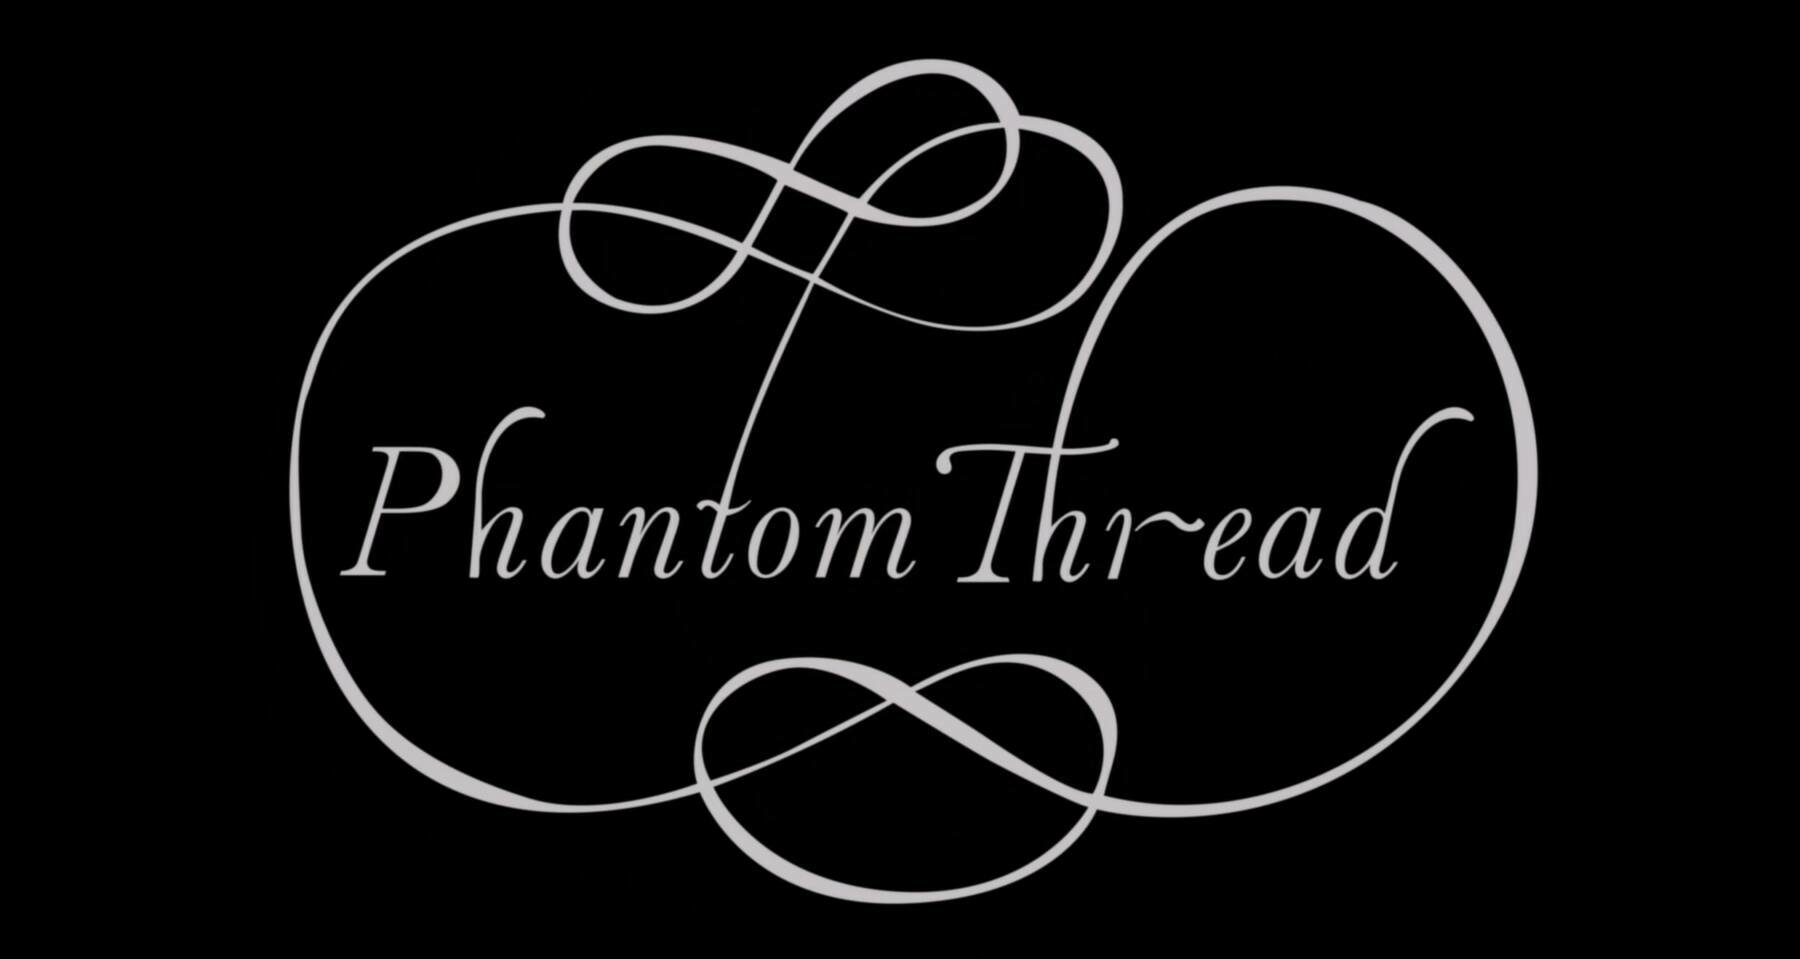 The title card for the film, Phantom Thread.